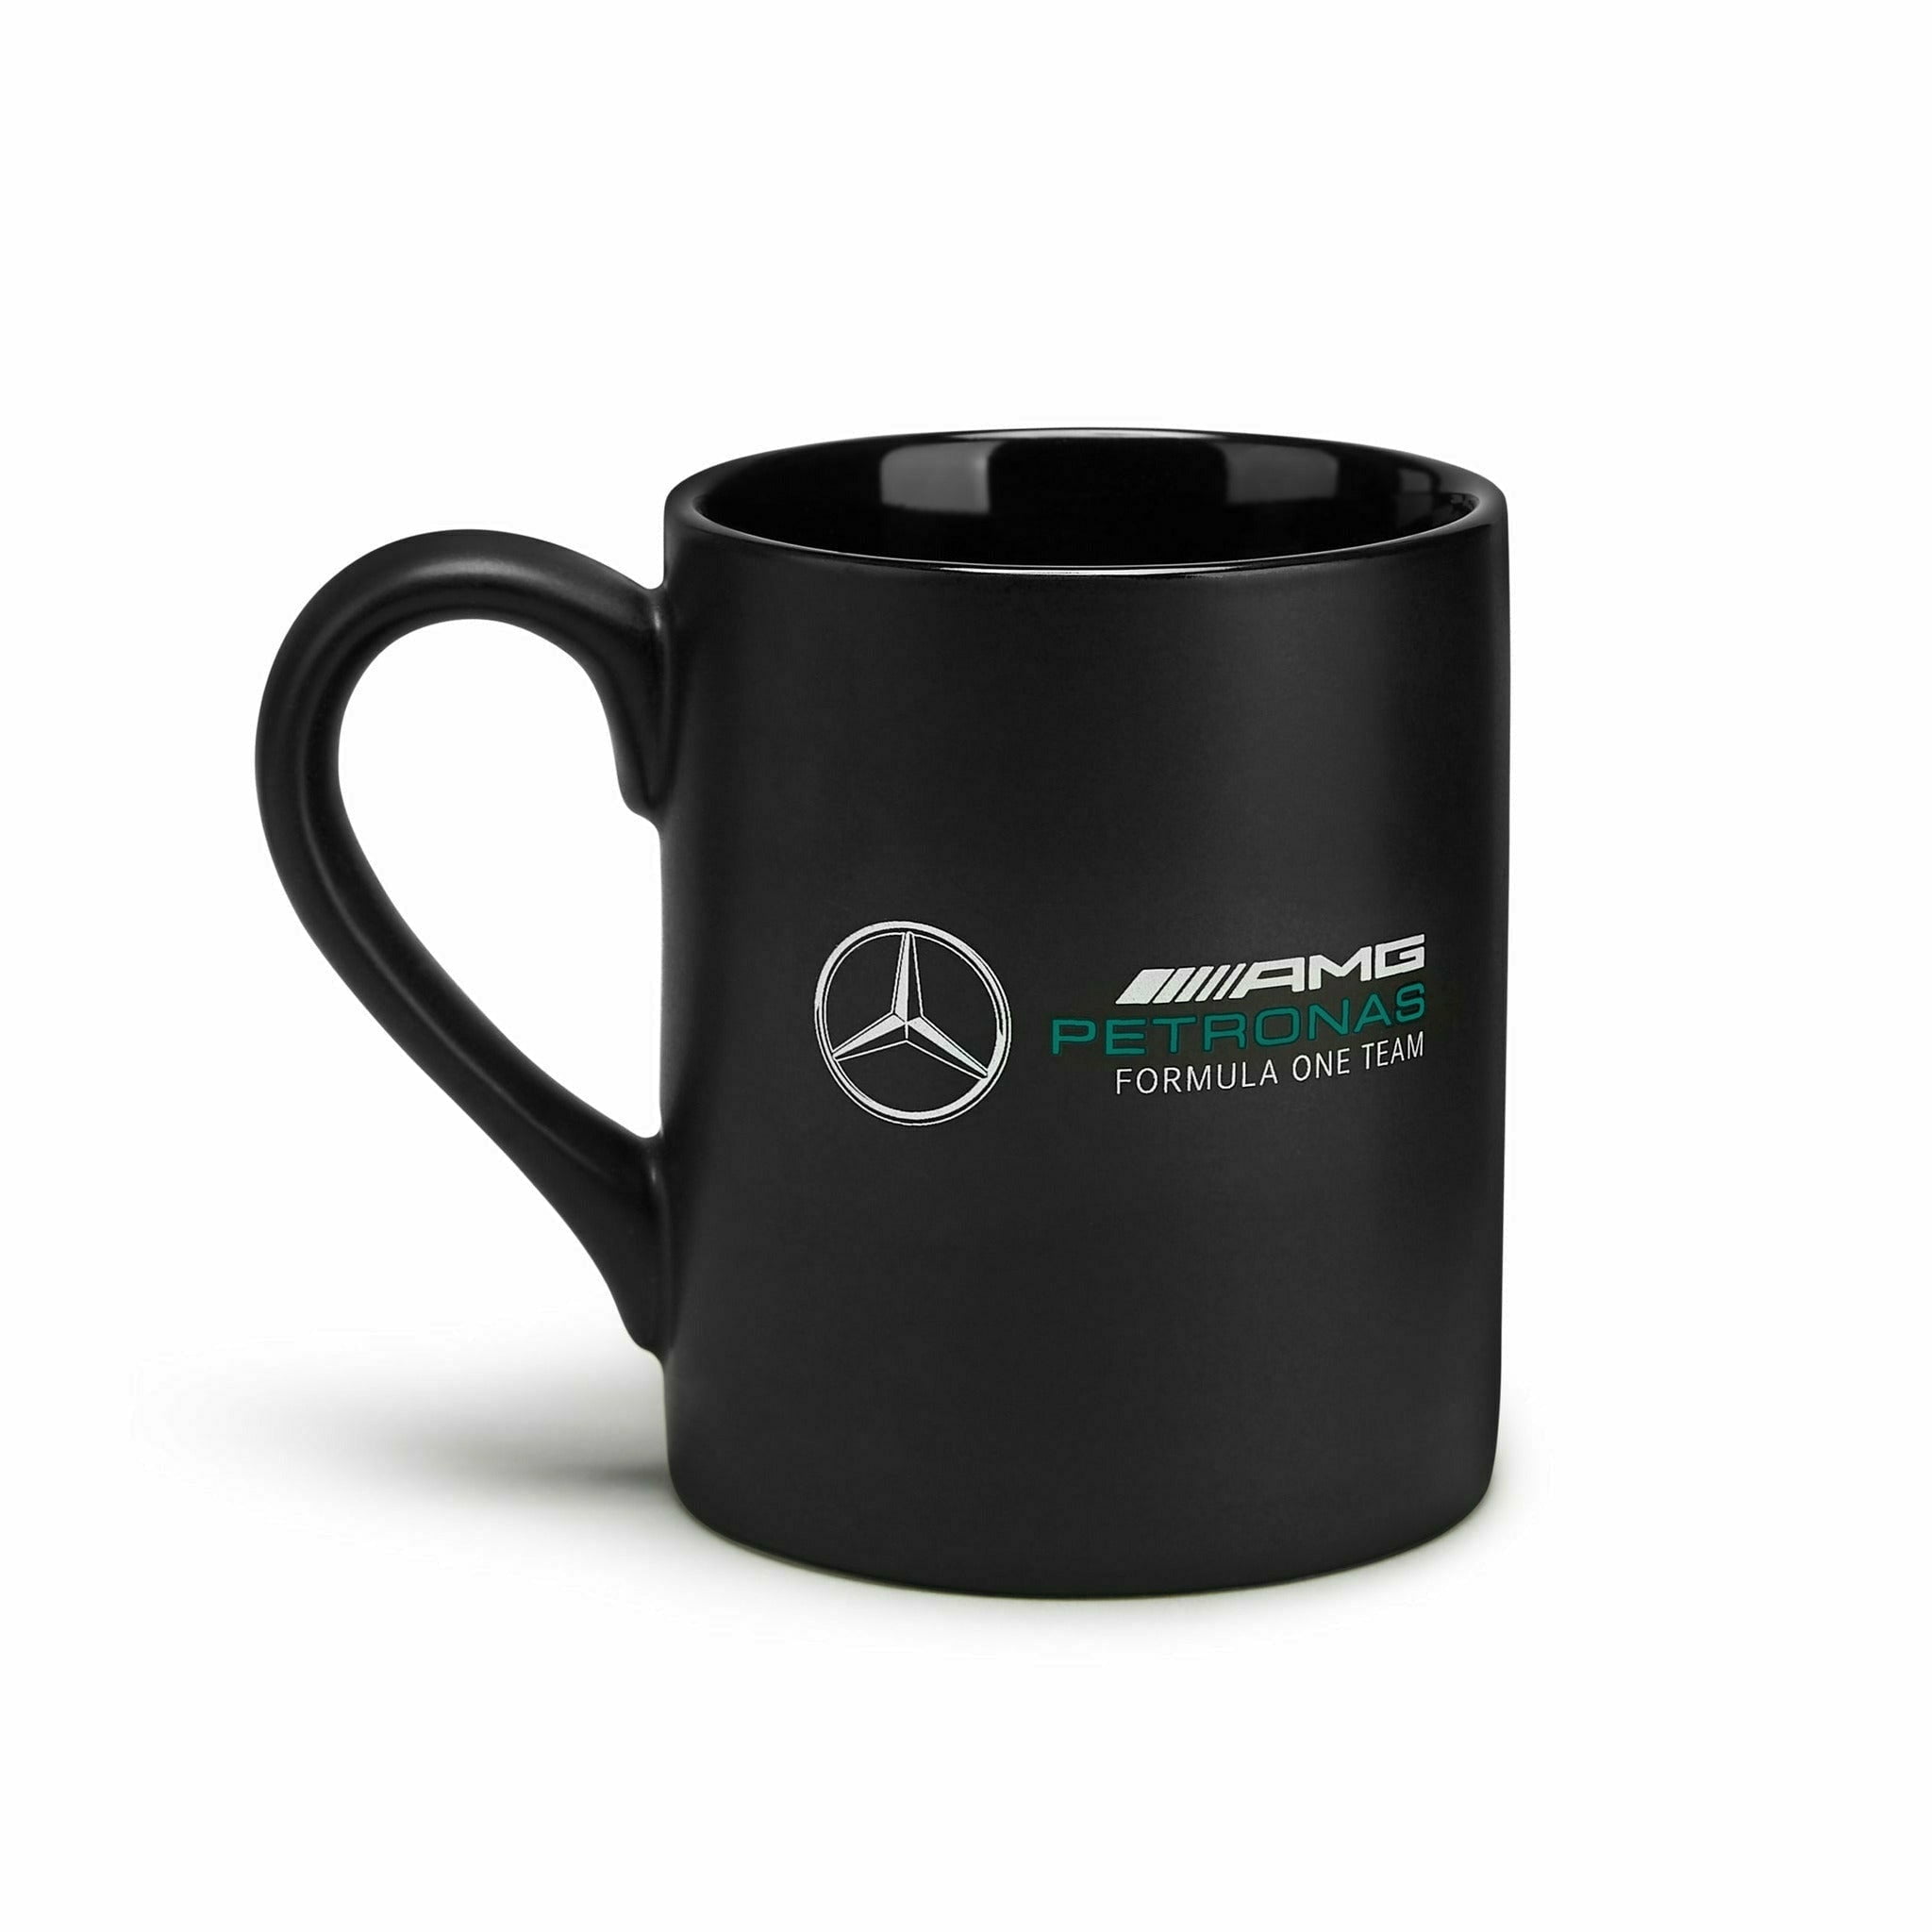 mercedes benz coffee mug